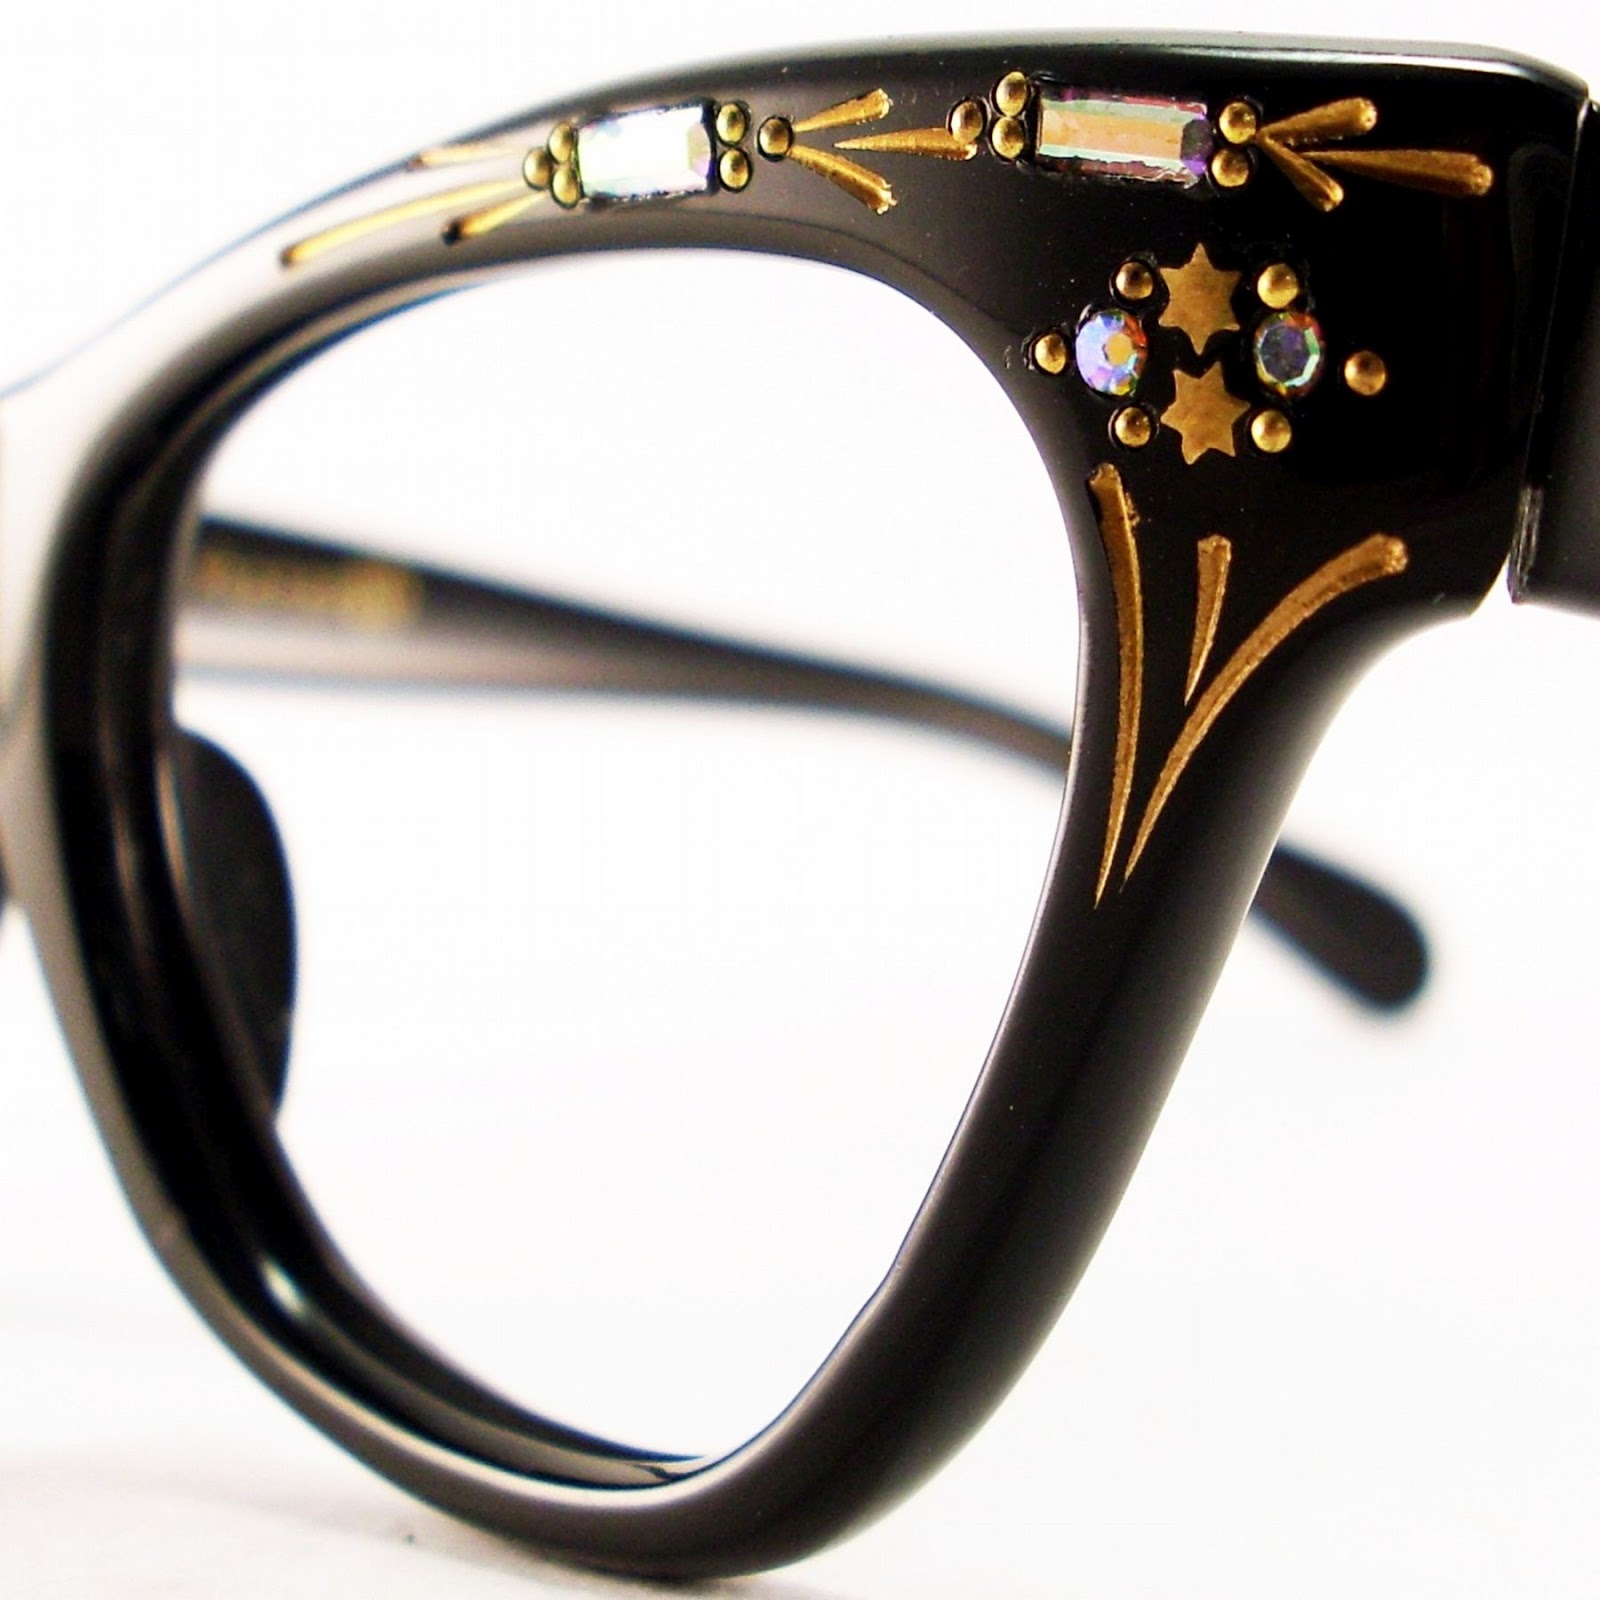 Vintage Eyeglasses Frames Eyewear Sunglasses 50s Cat Eye Glasses Vintage 50s Frame France